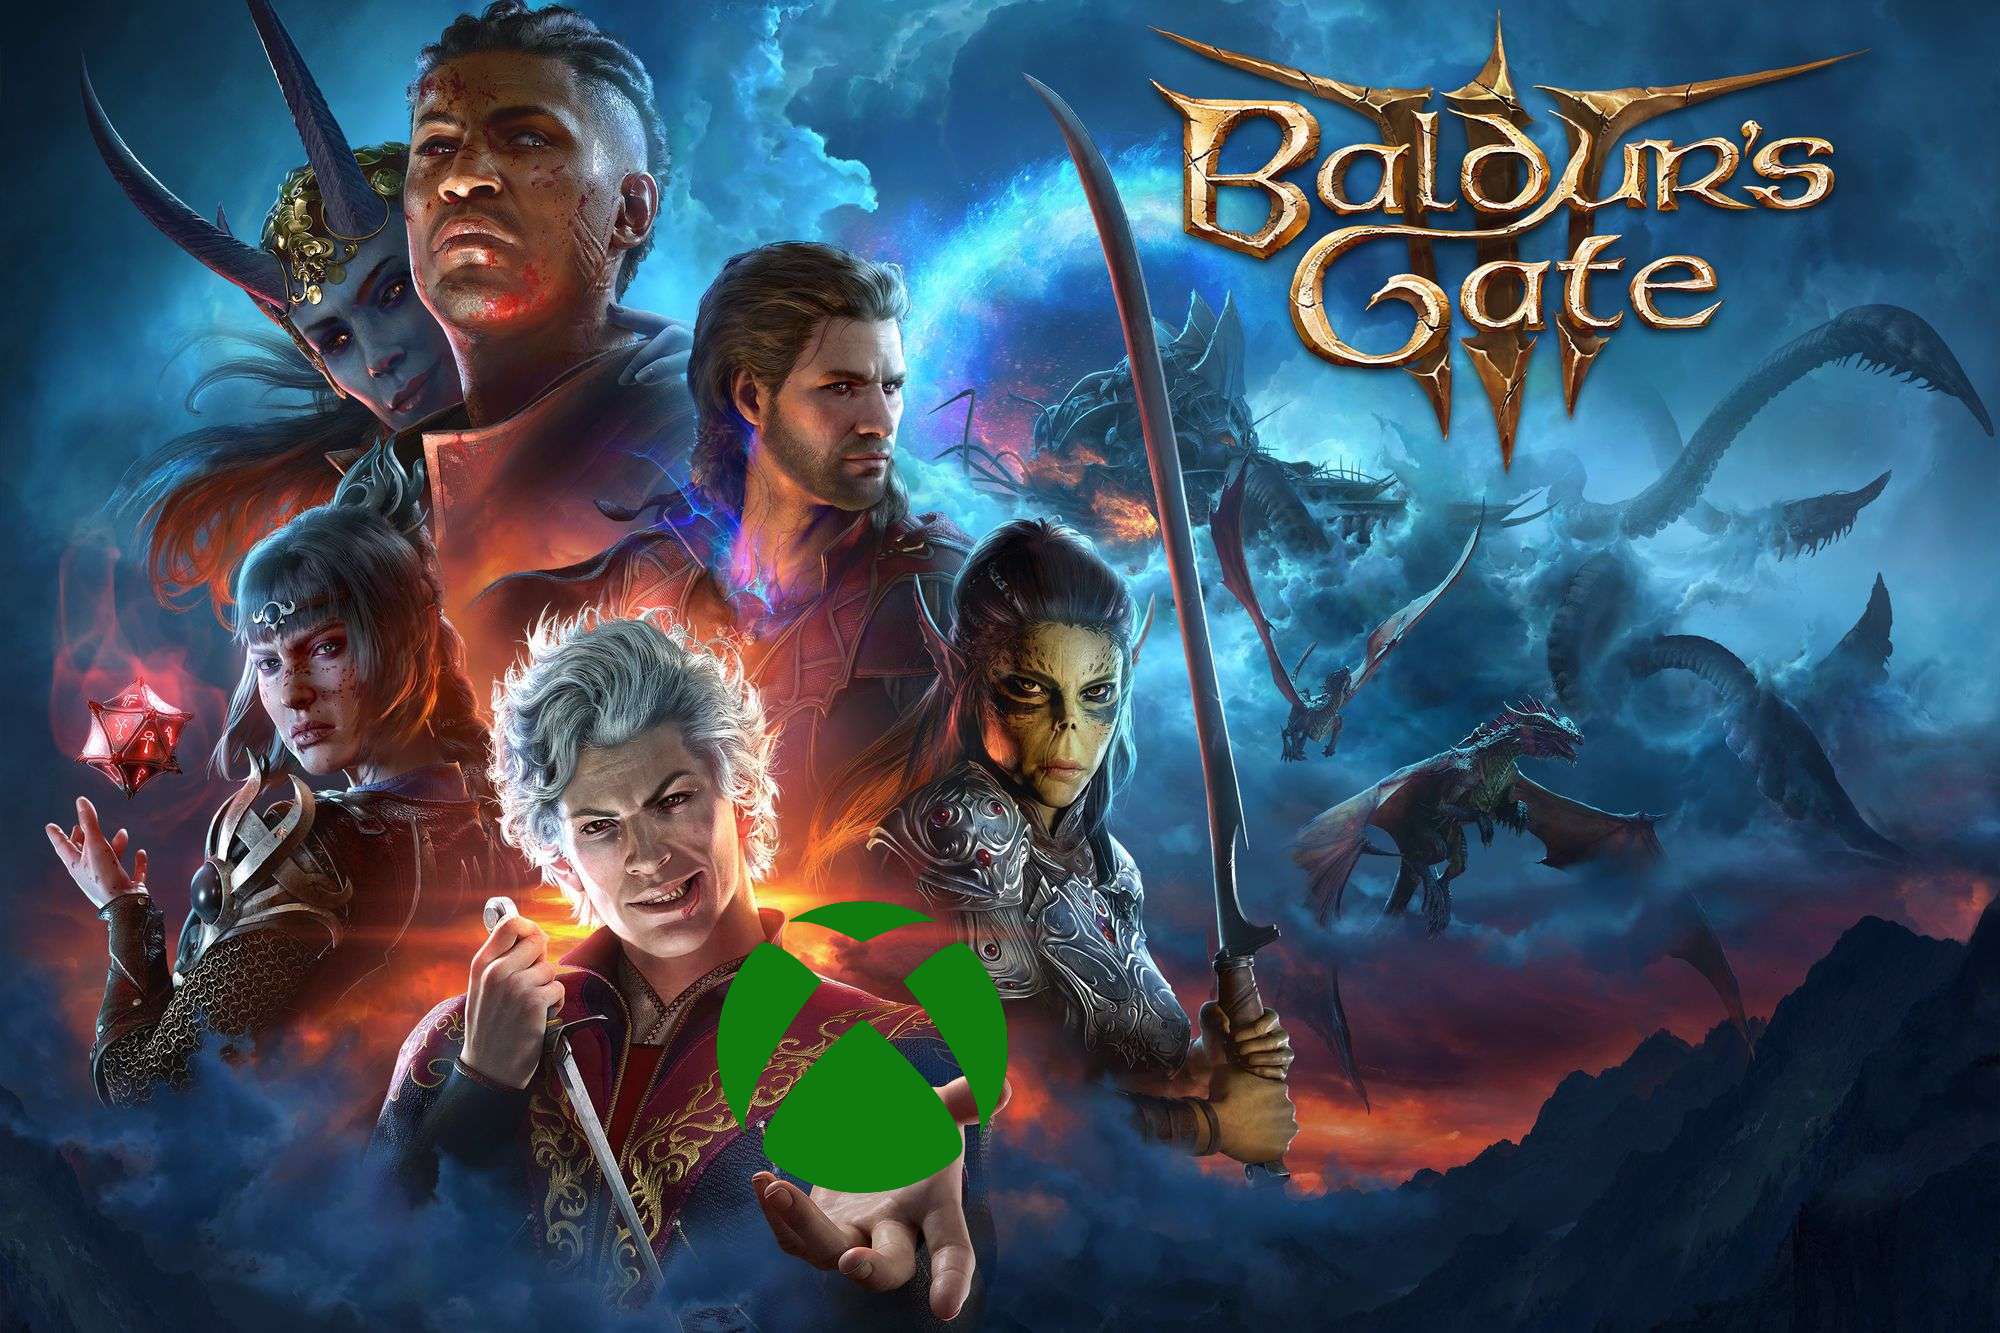 Baldur's Gate 3 with the Xbox logo.